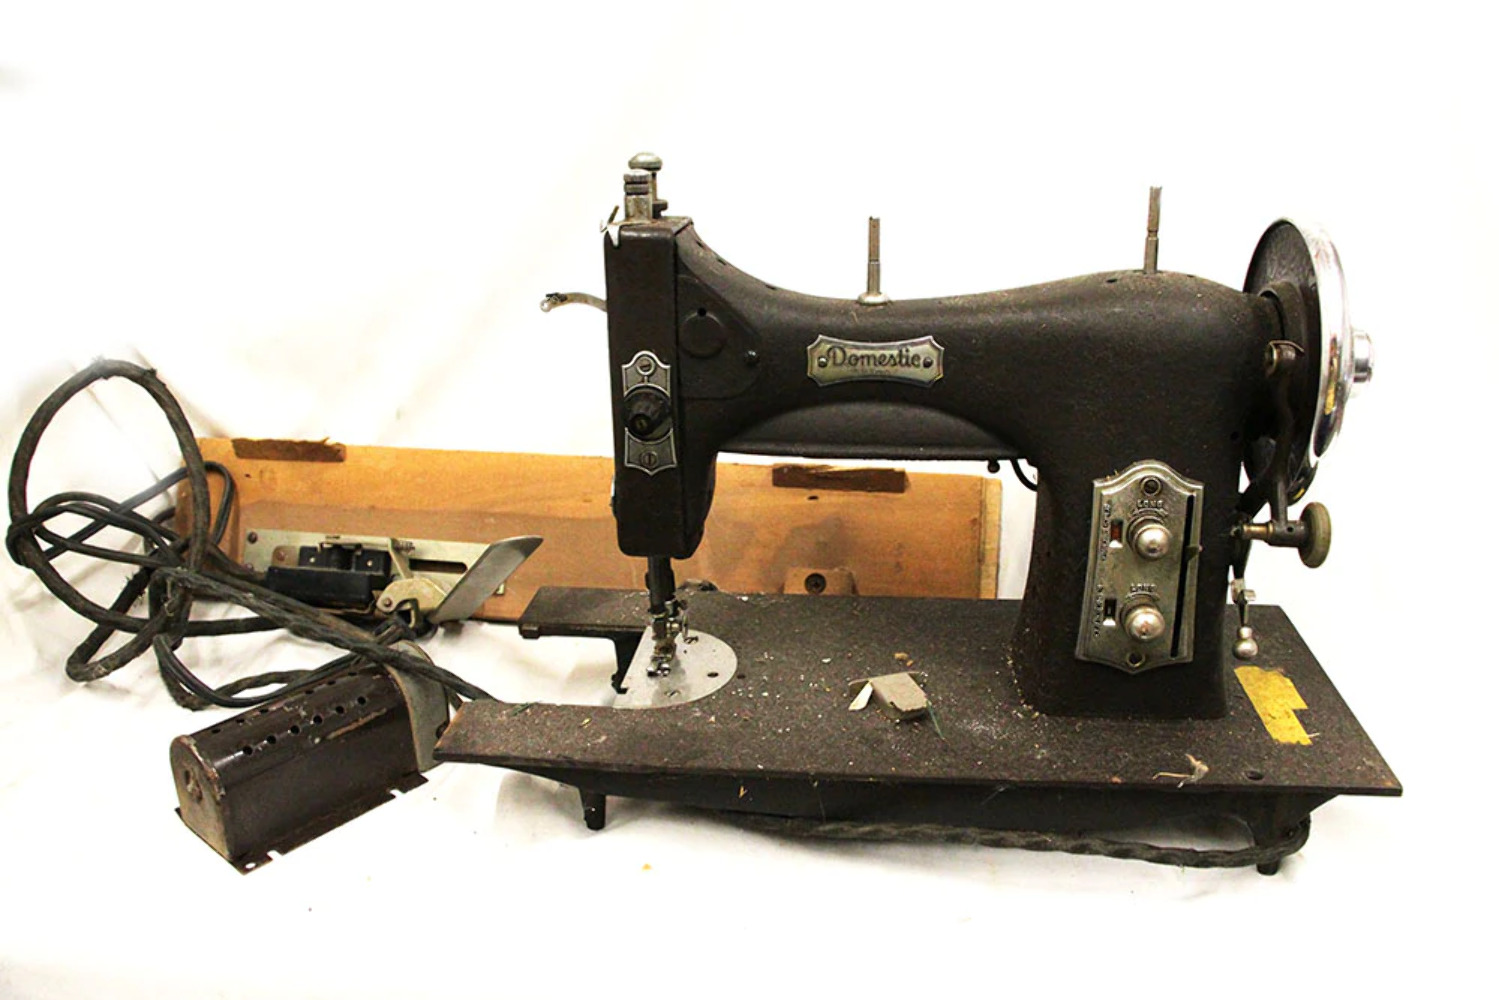 Domestic Sewing Machine model 153